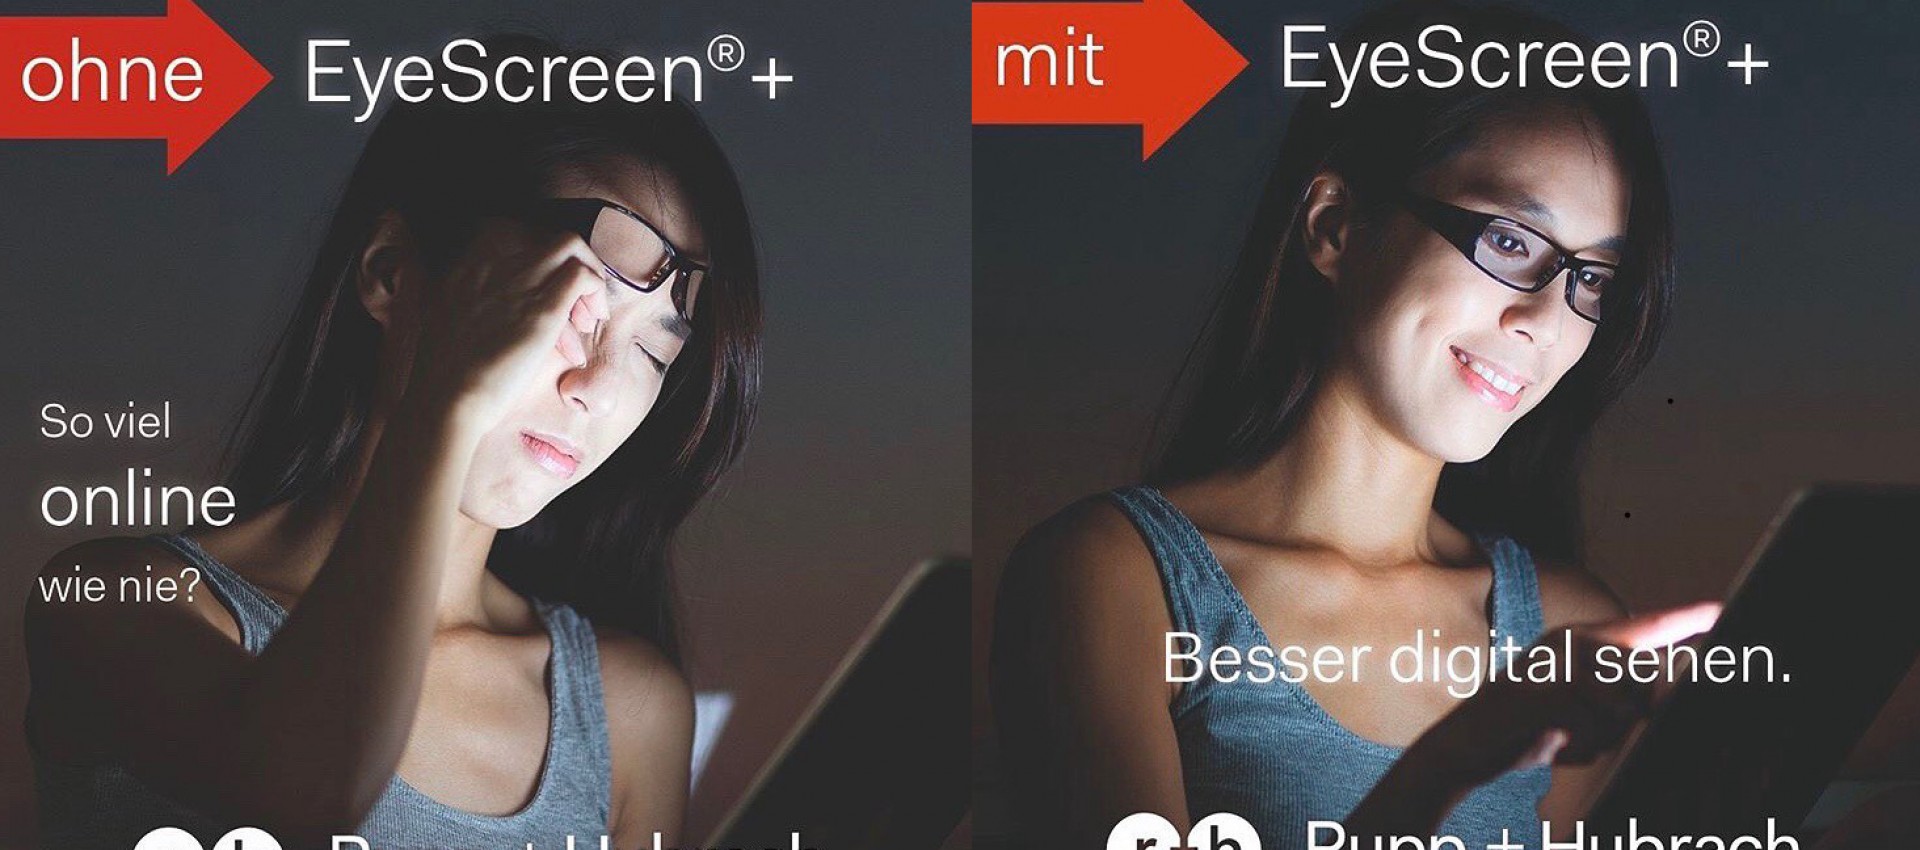 EyeScreen+ bei hoher Bildschirm Belastung